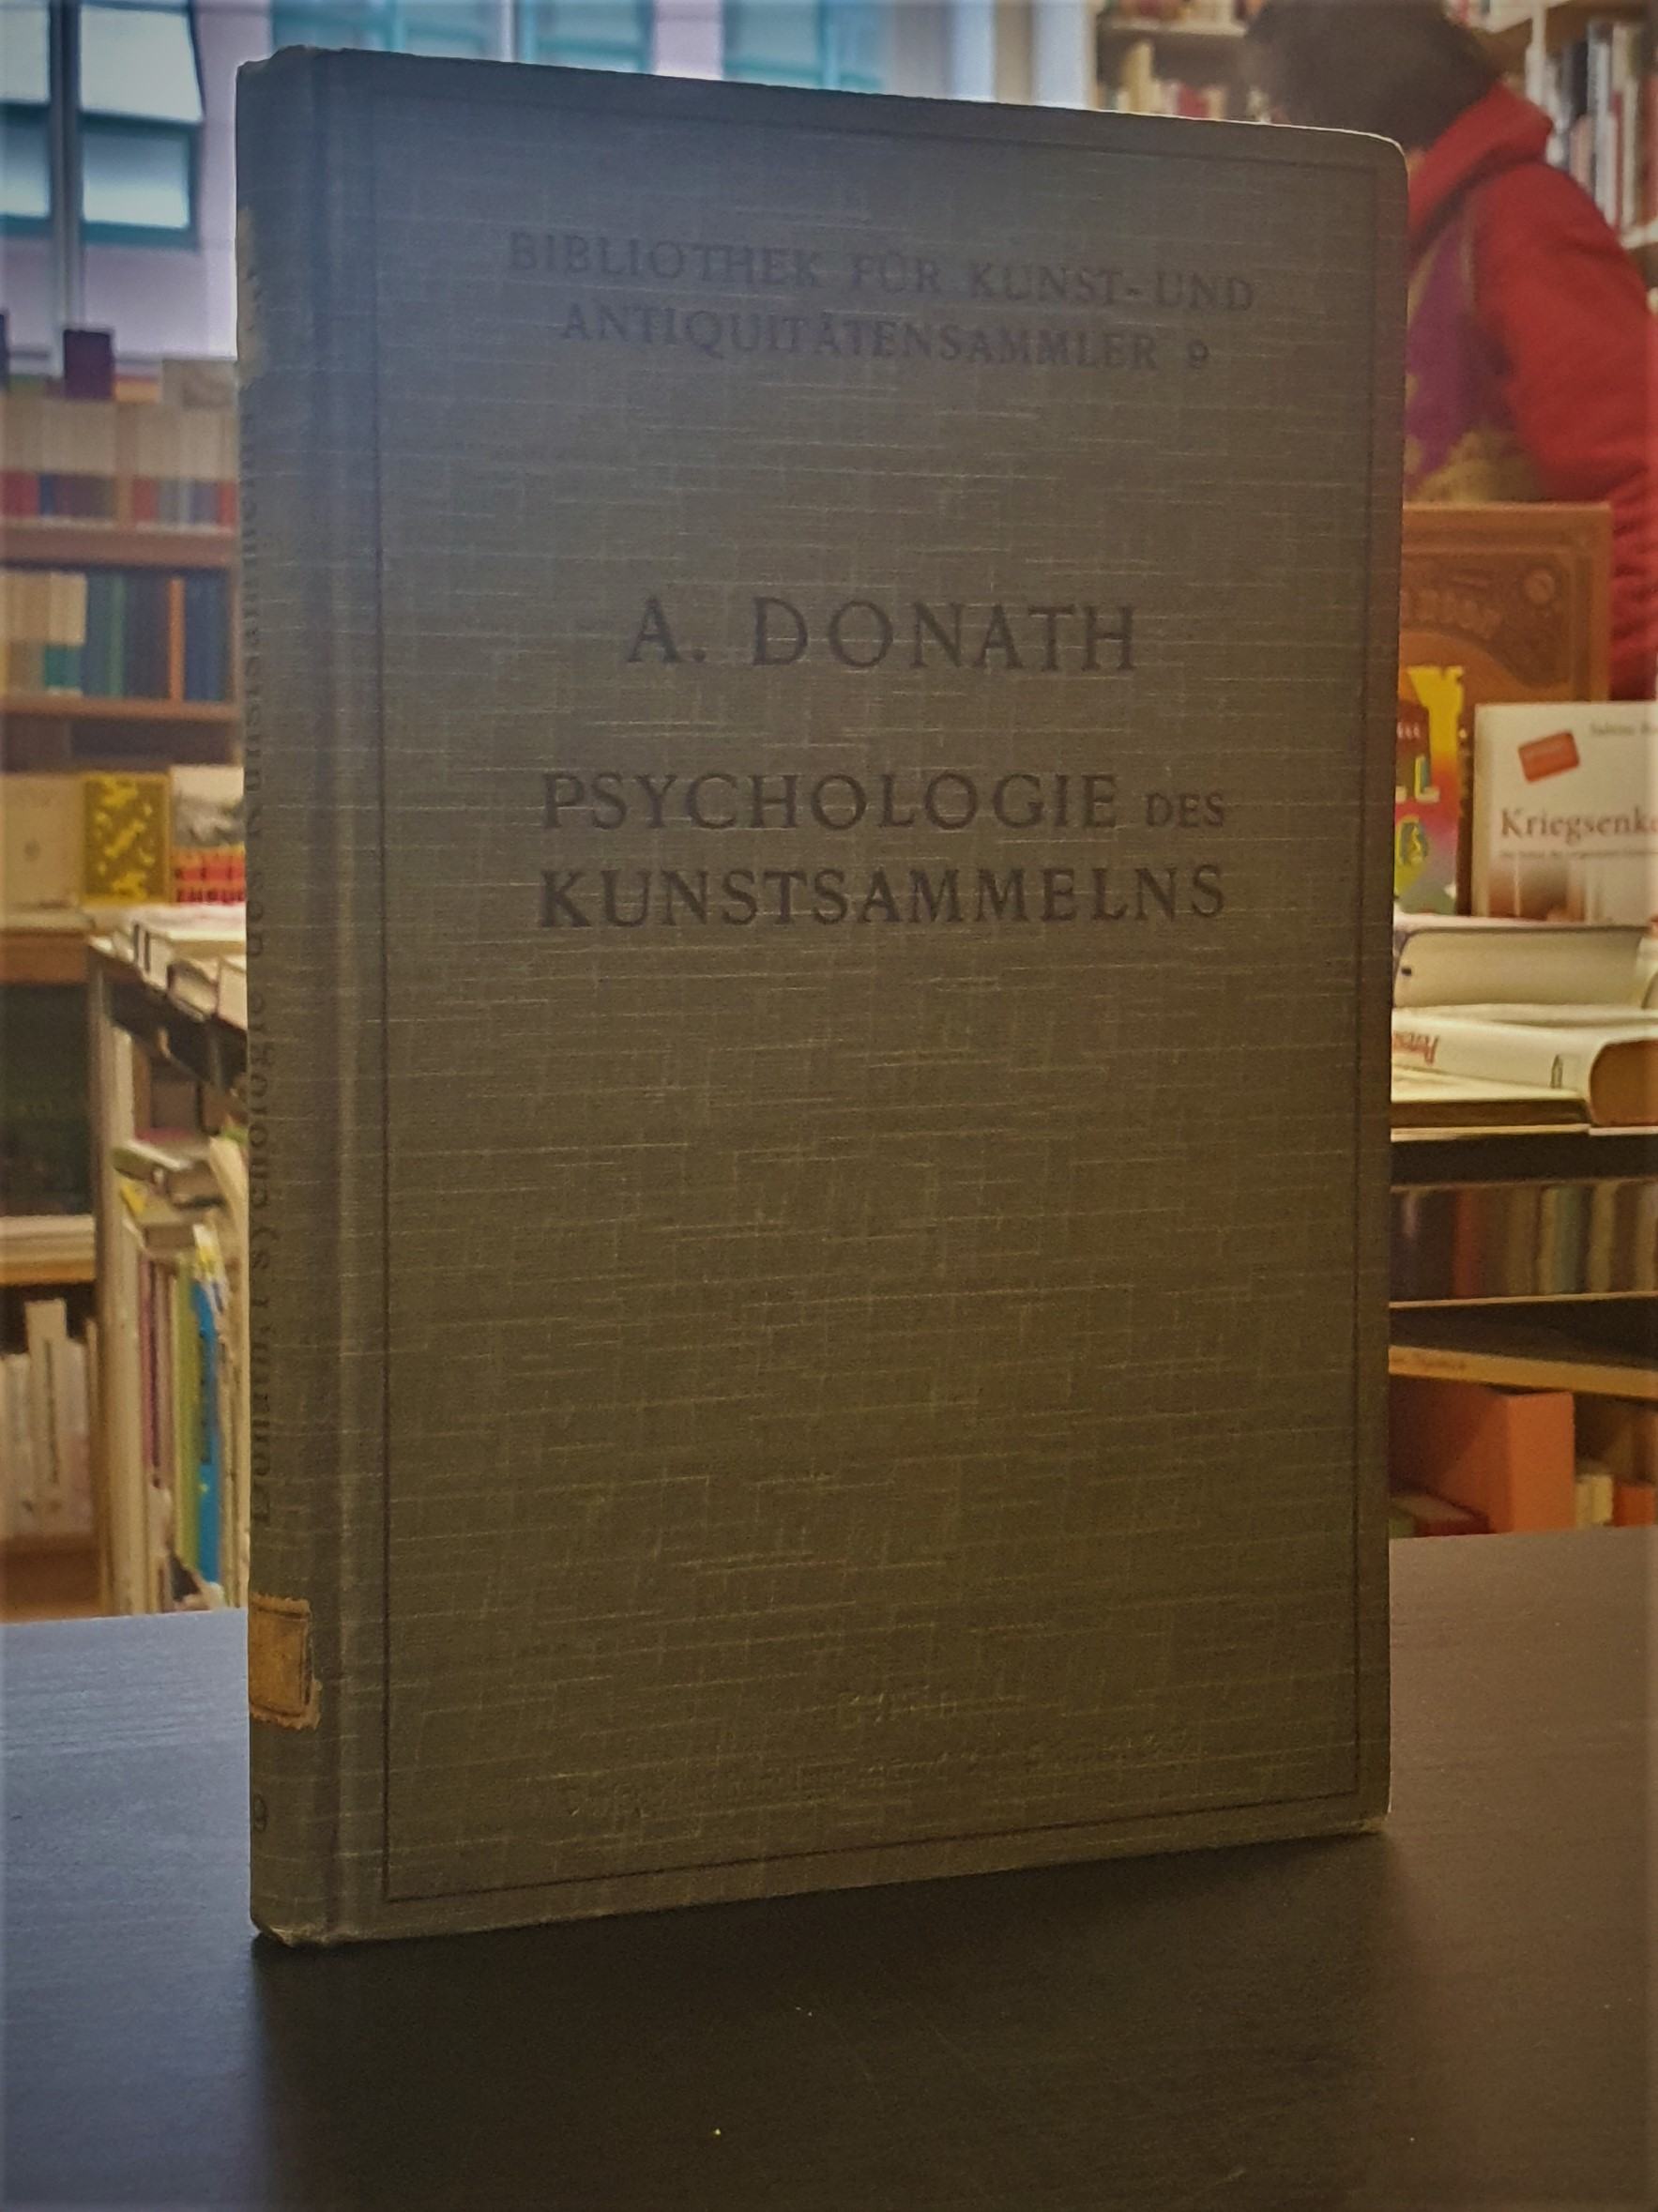 Donath, Psychologie des Kunstsammelns,